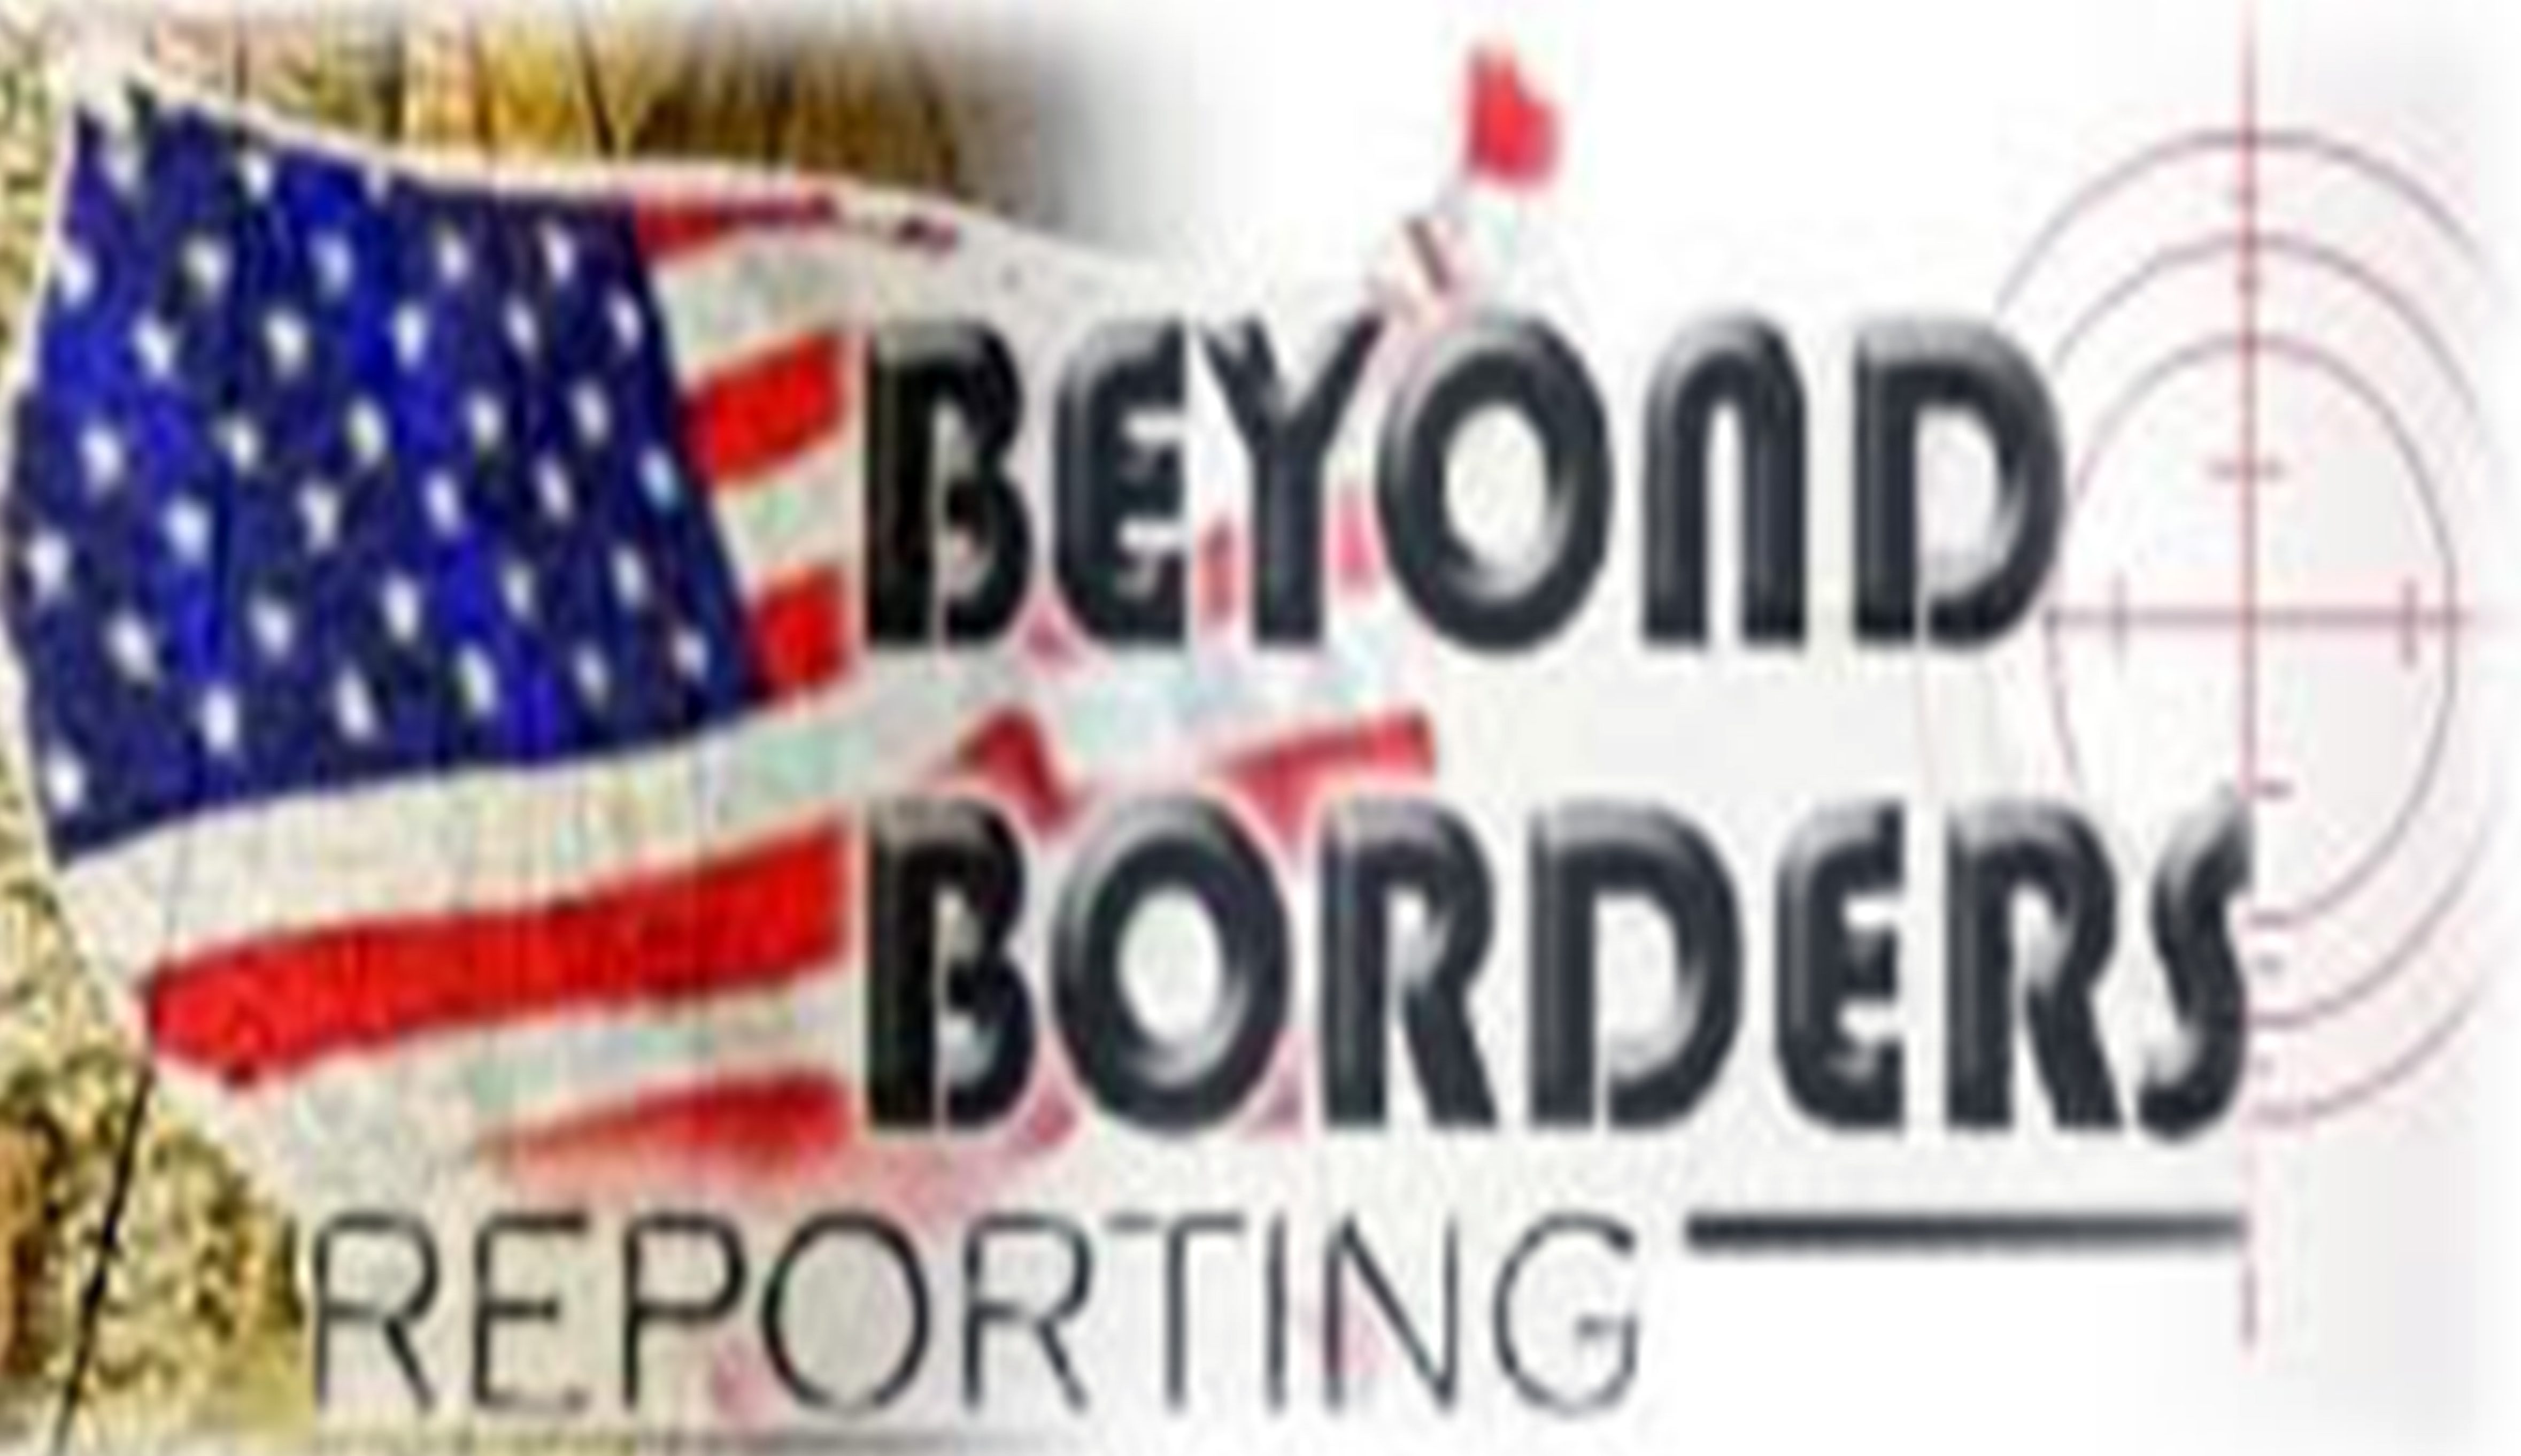 Beyond Borders Reporting